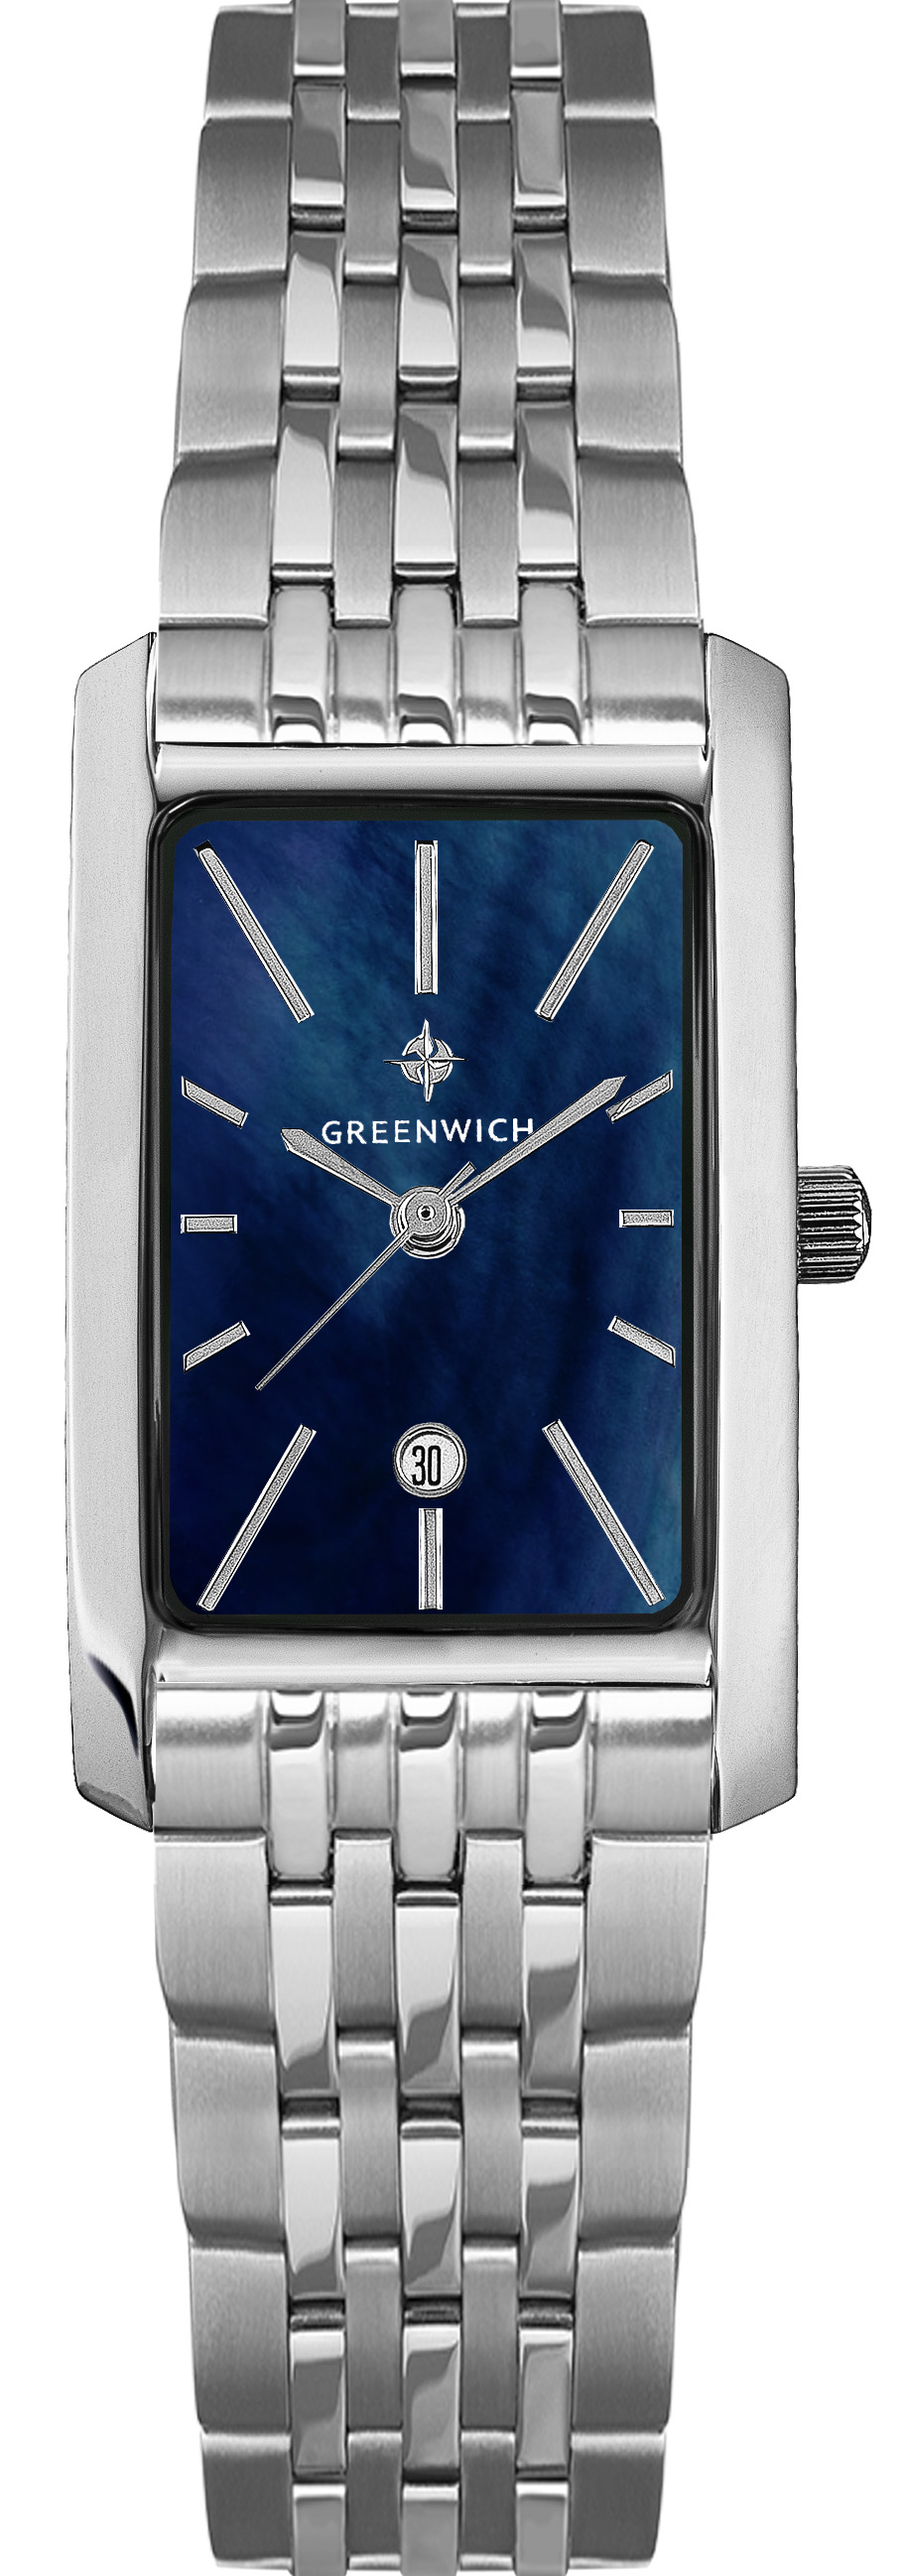 GW 511.10.16, наручные часы Greenwich